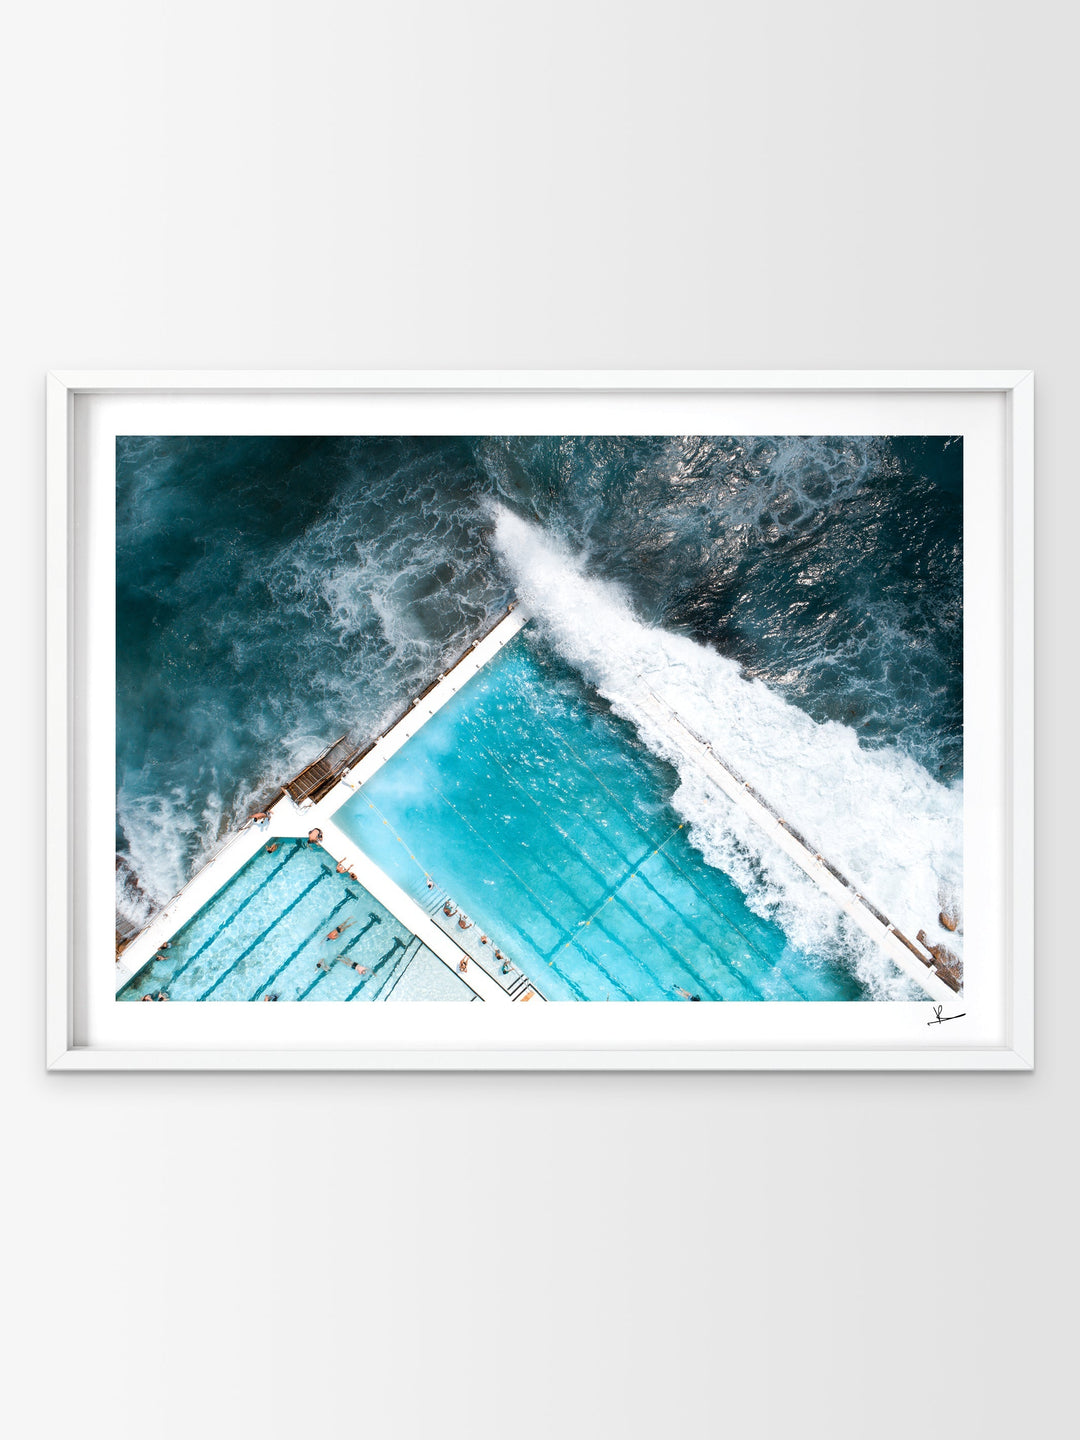 Icebergs Wipe Out 04 - Wall Art Print - Australia Unseen